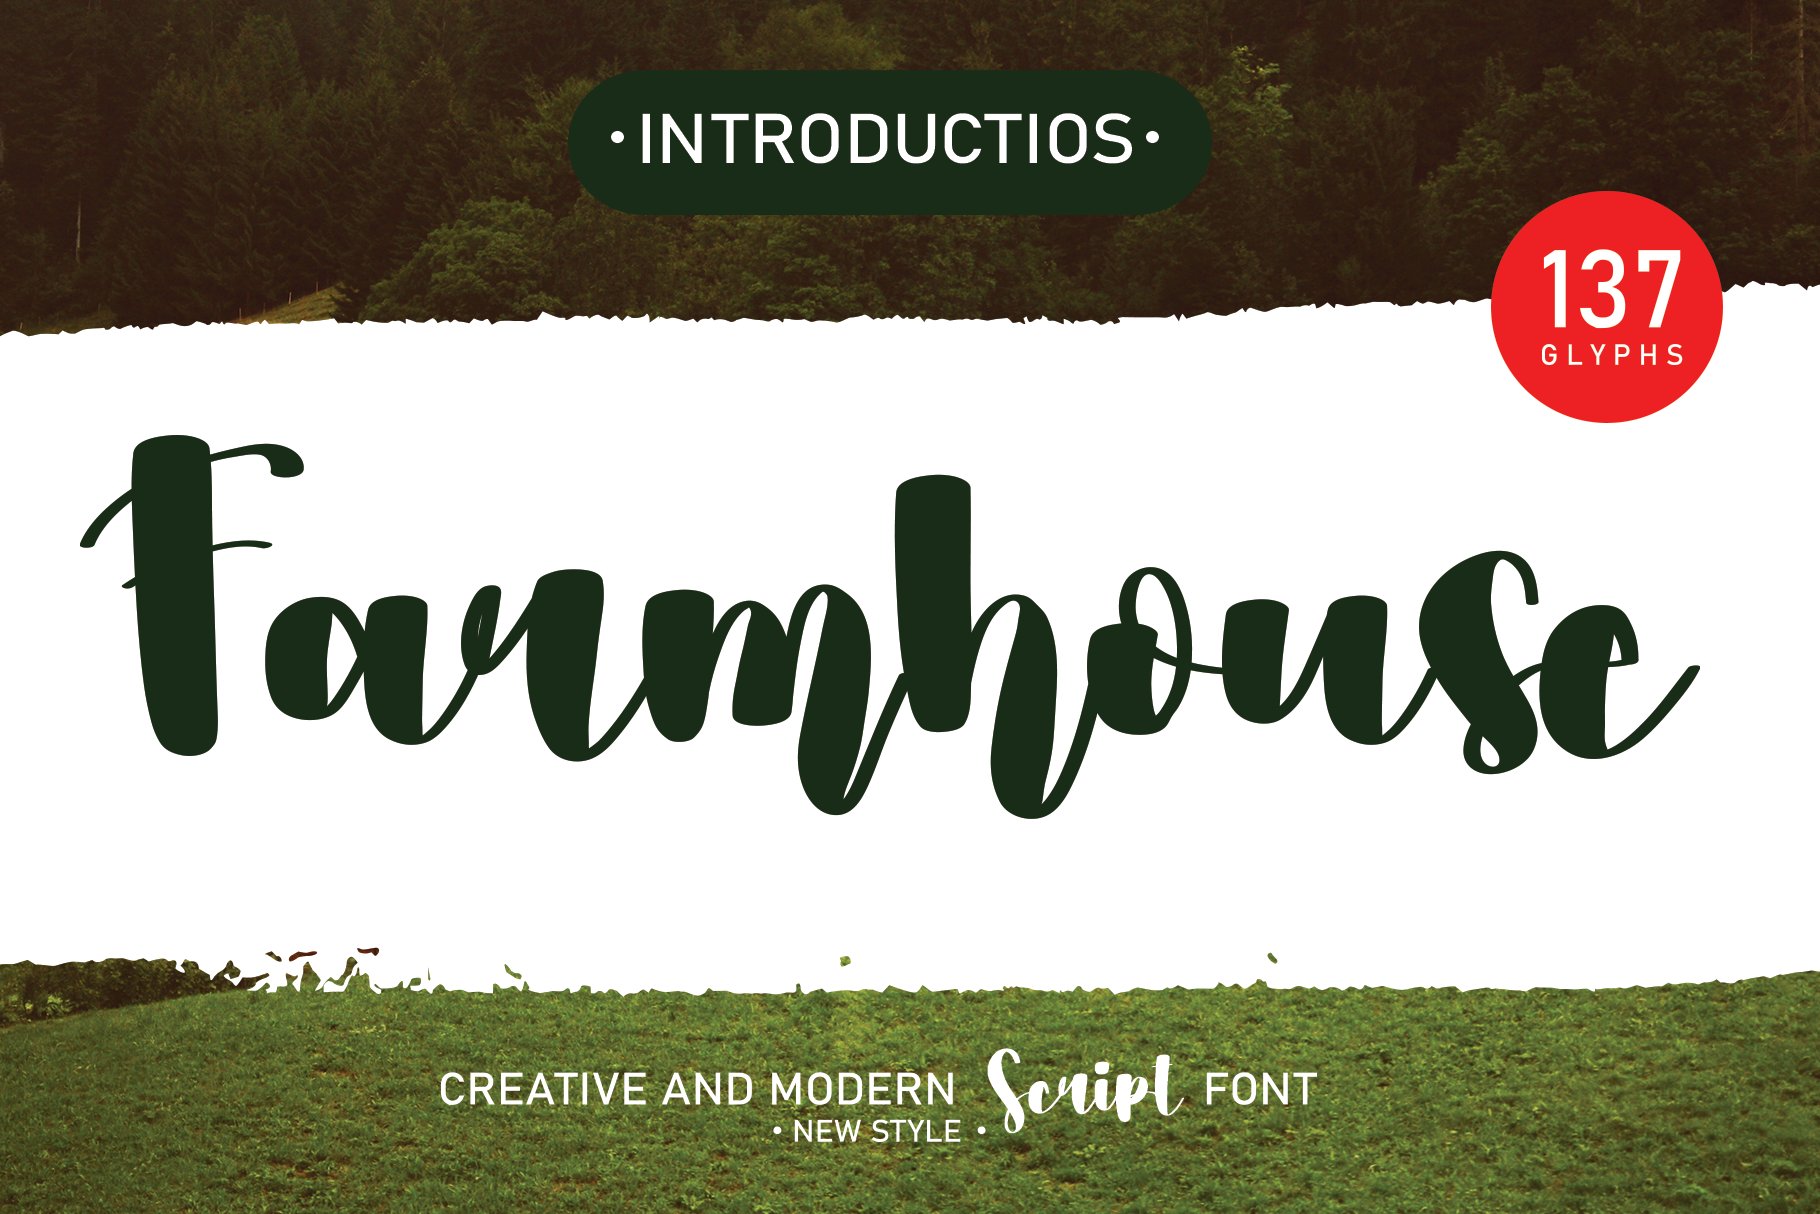 Farmhouse | Handwriten Font cover image.